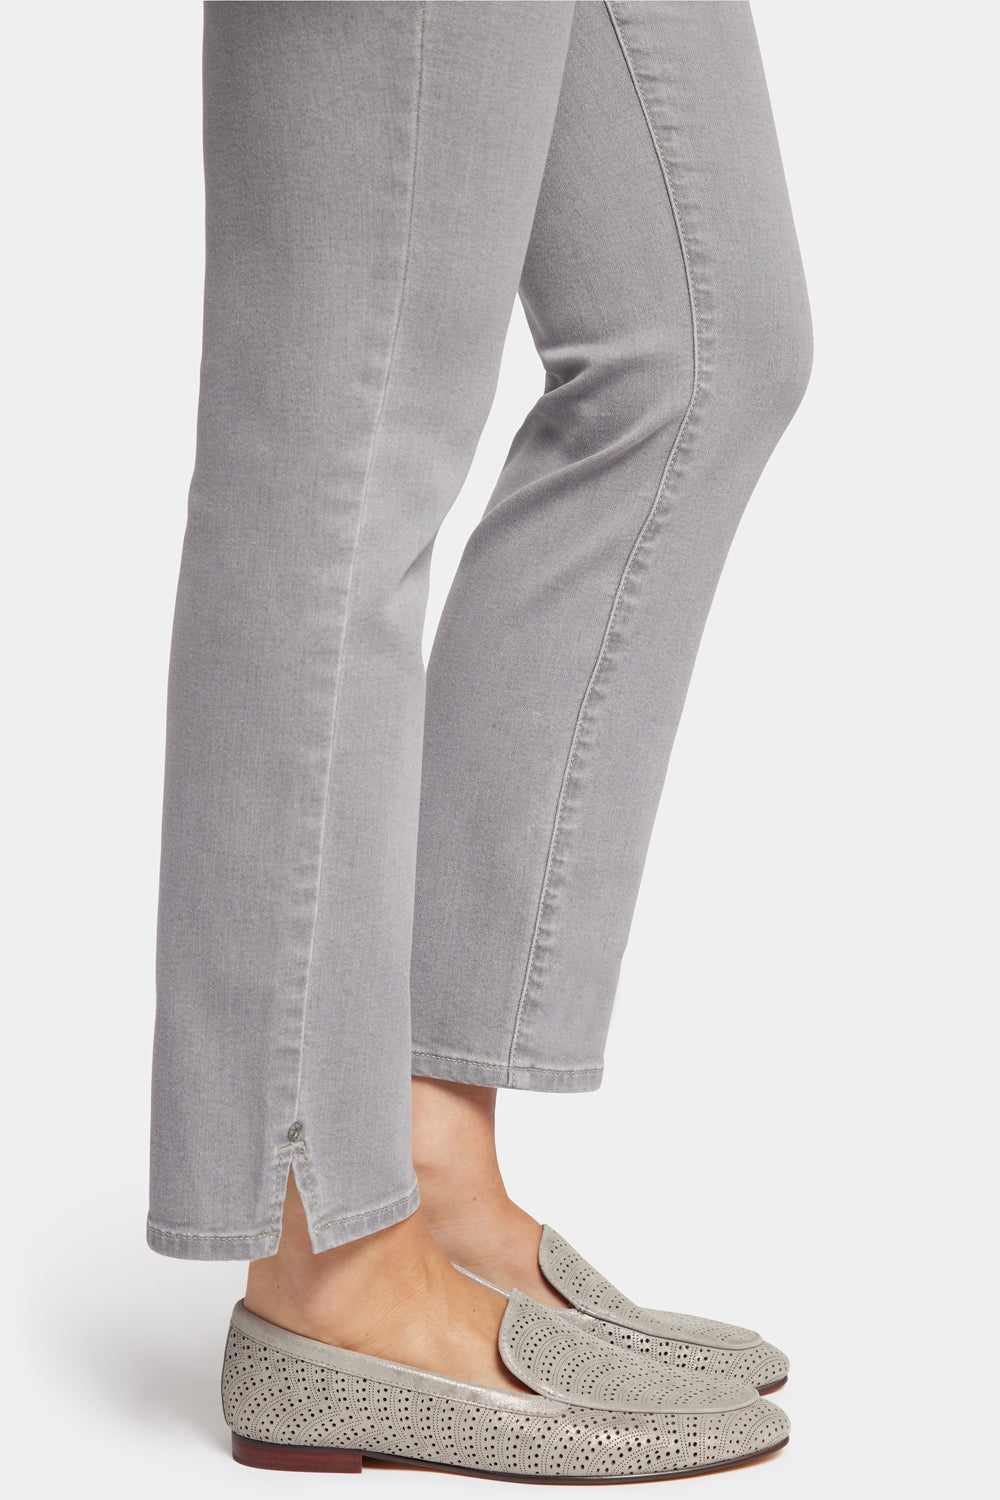 NYDJ Sheri Slim Ankle Jeans  With Riveted Side Slits - Charisma